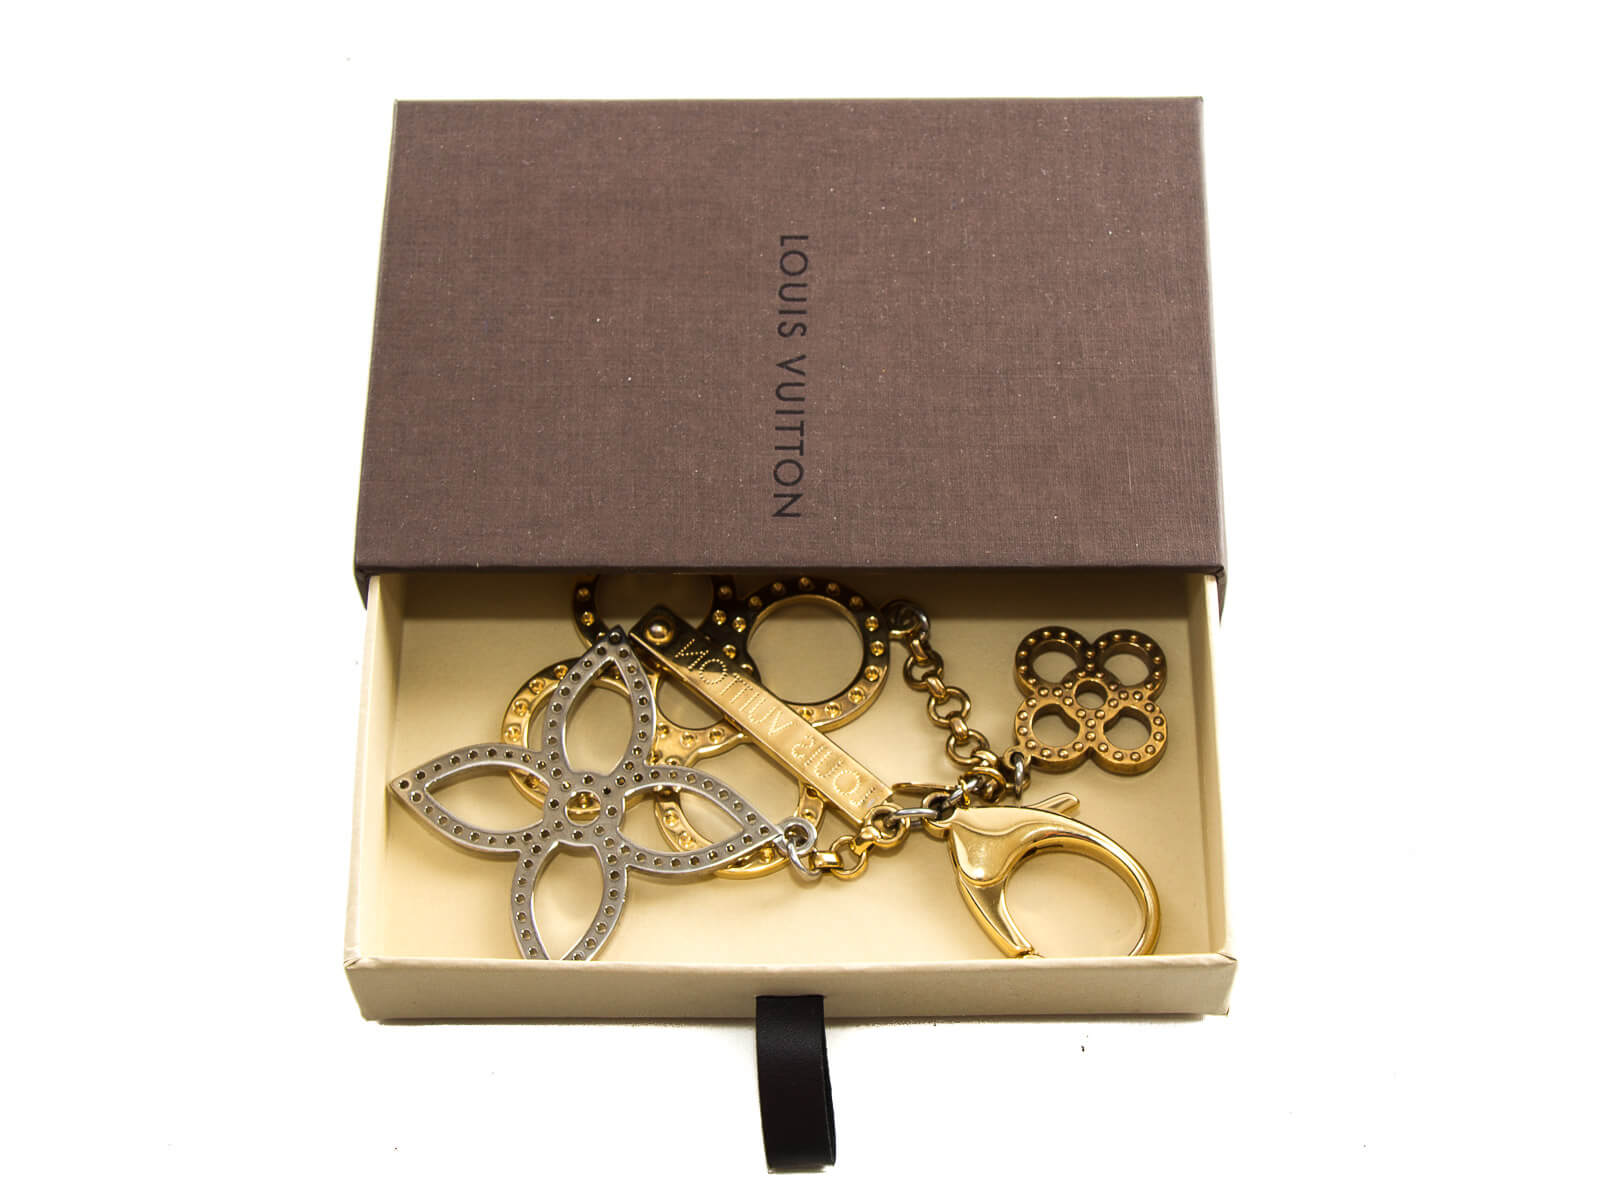 Louis Vuitton Authentic Metal bijoux sac tapage Key Chain Bag Charm Auth LV